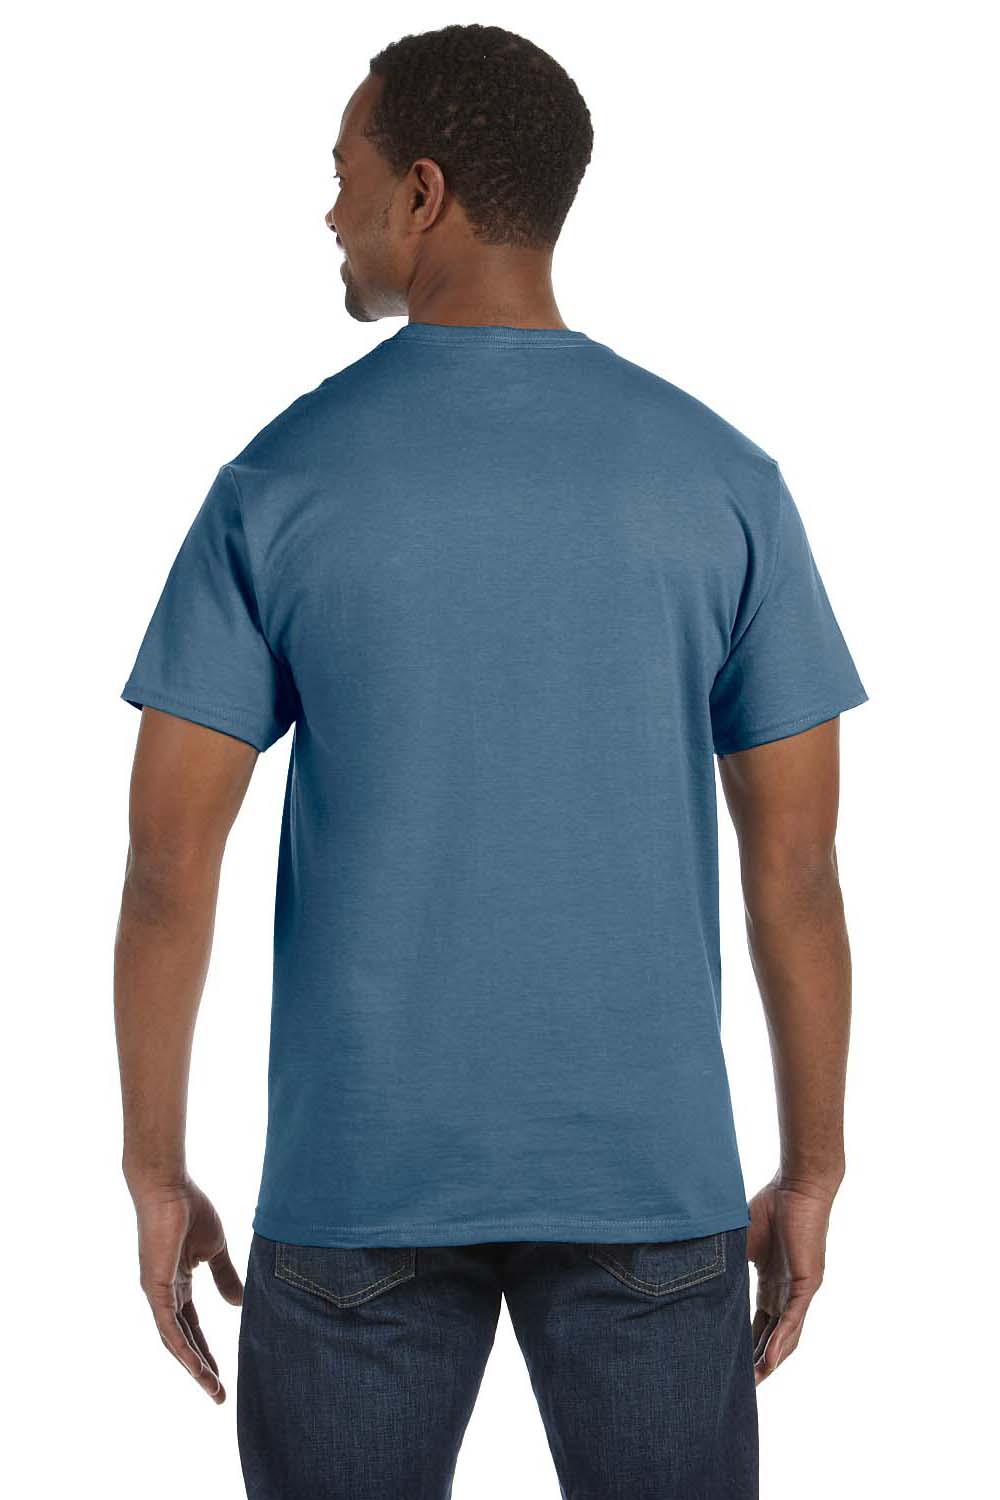 Hanes 5250T Mens ComfortSoft Short Sleeve Crewneck T-Shirt Denim Blue Back